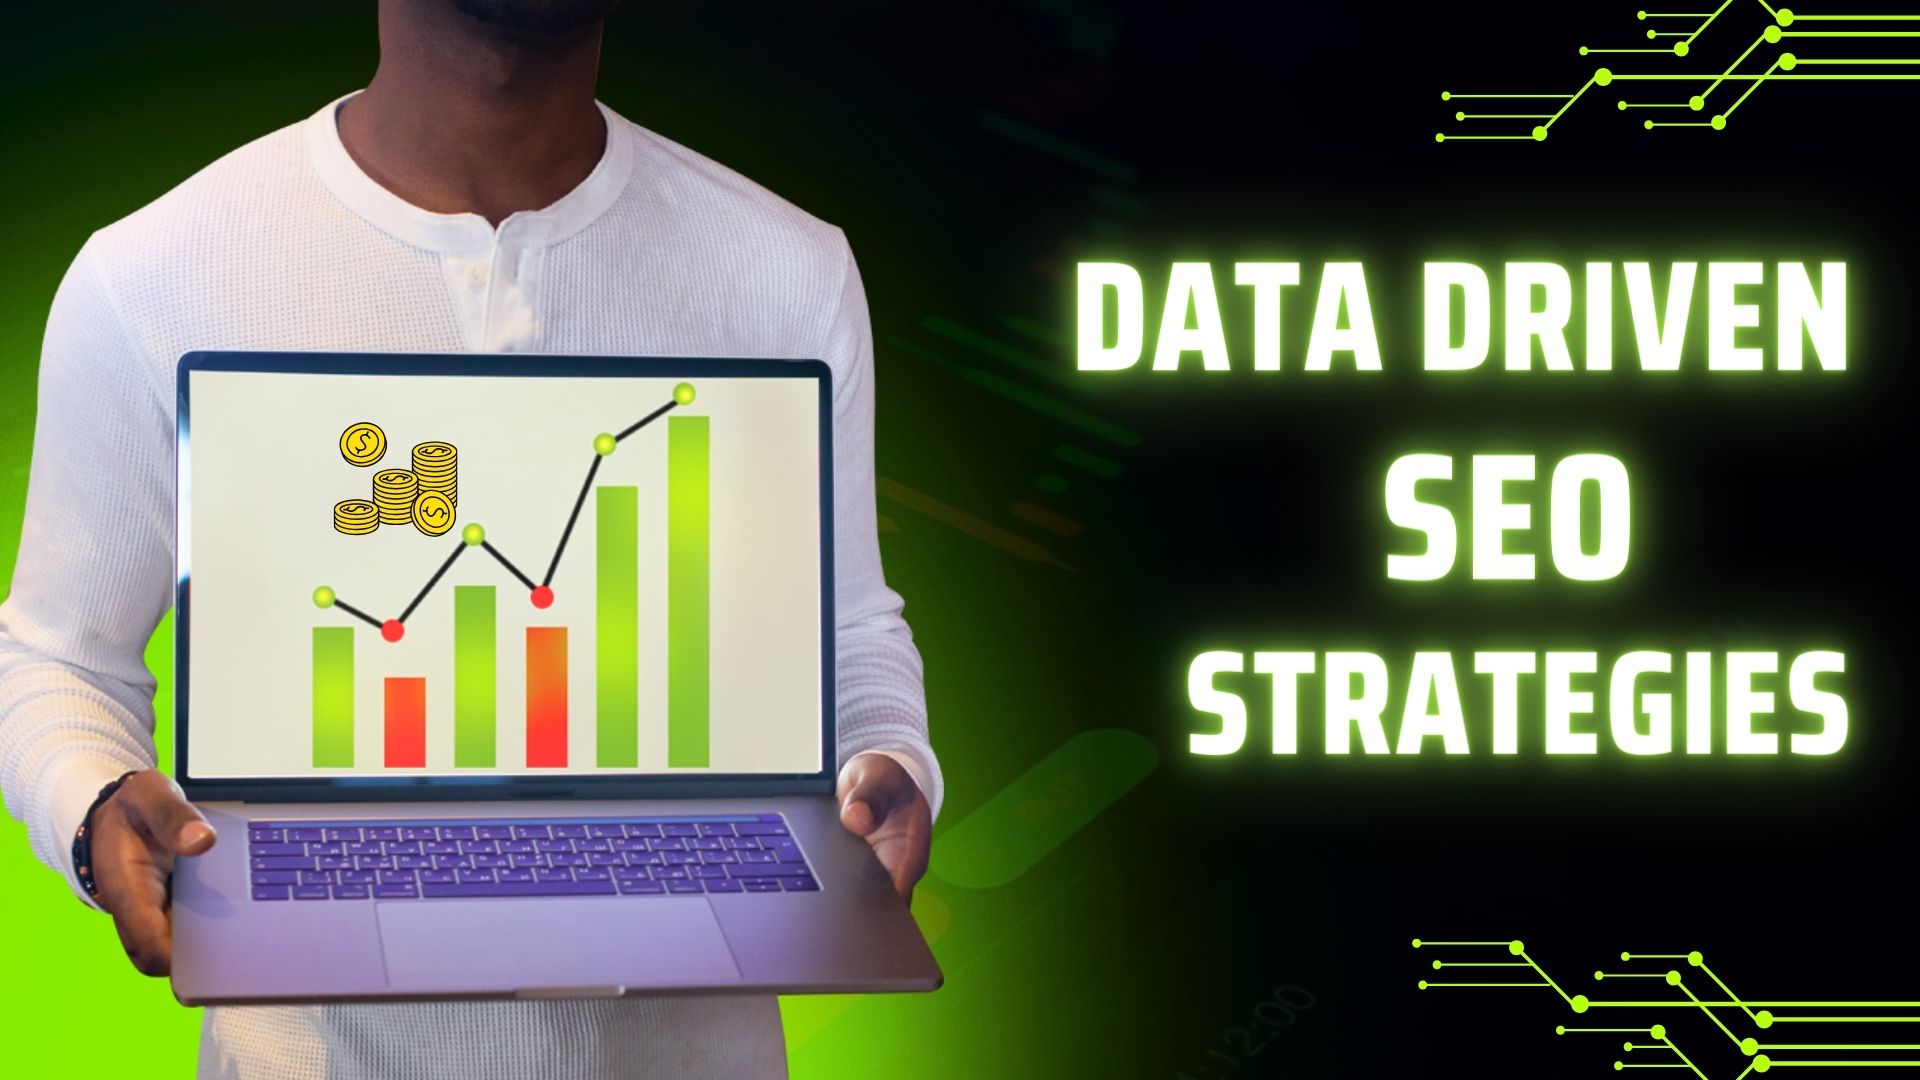 Six data-driven SEO strategies that optimize conversion rates